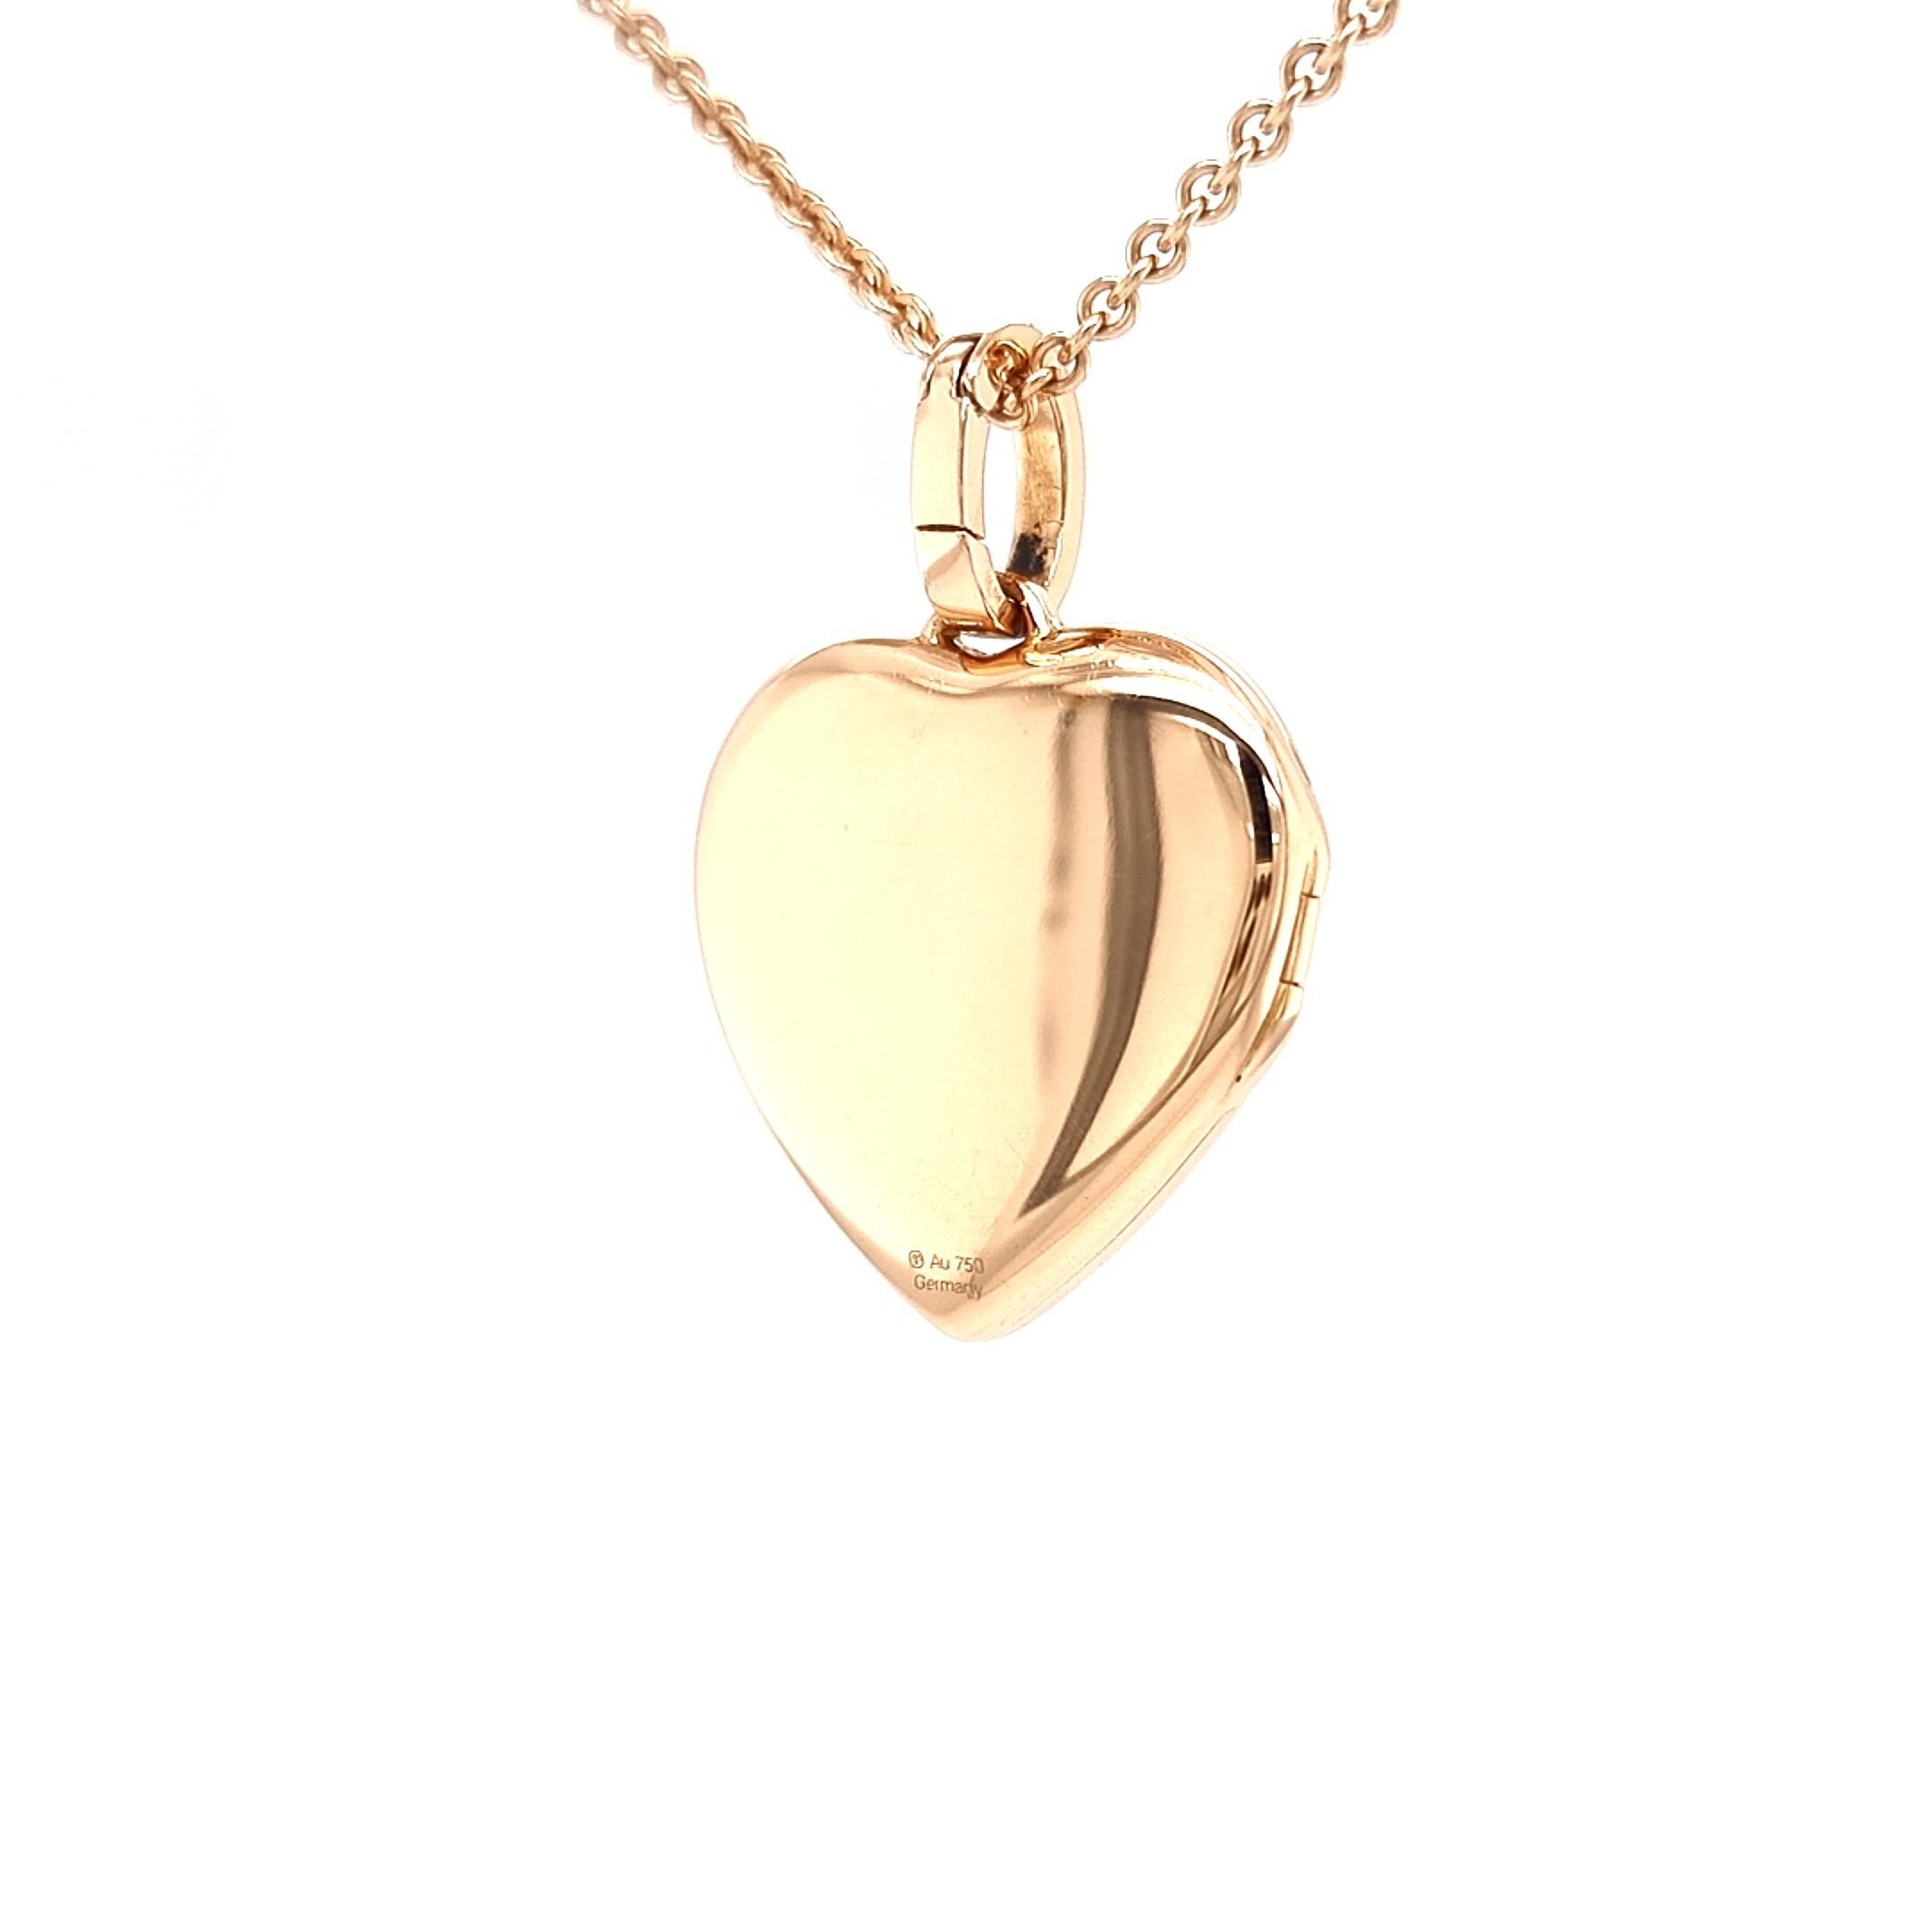 hallmark necklace heart